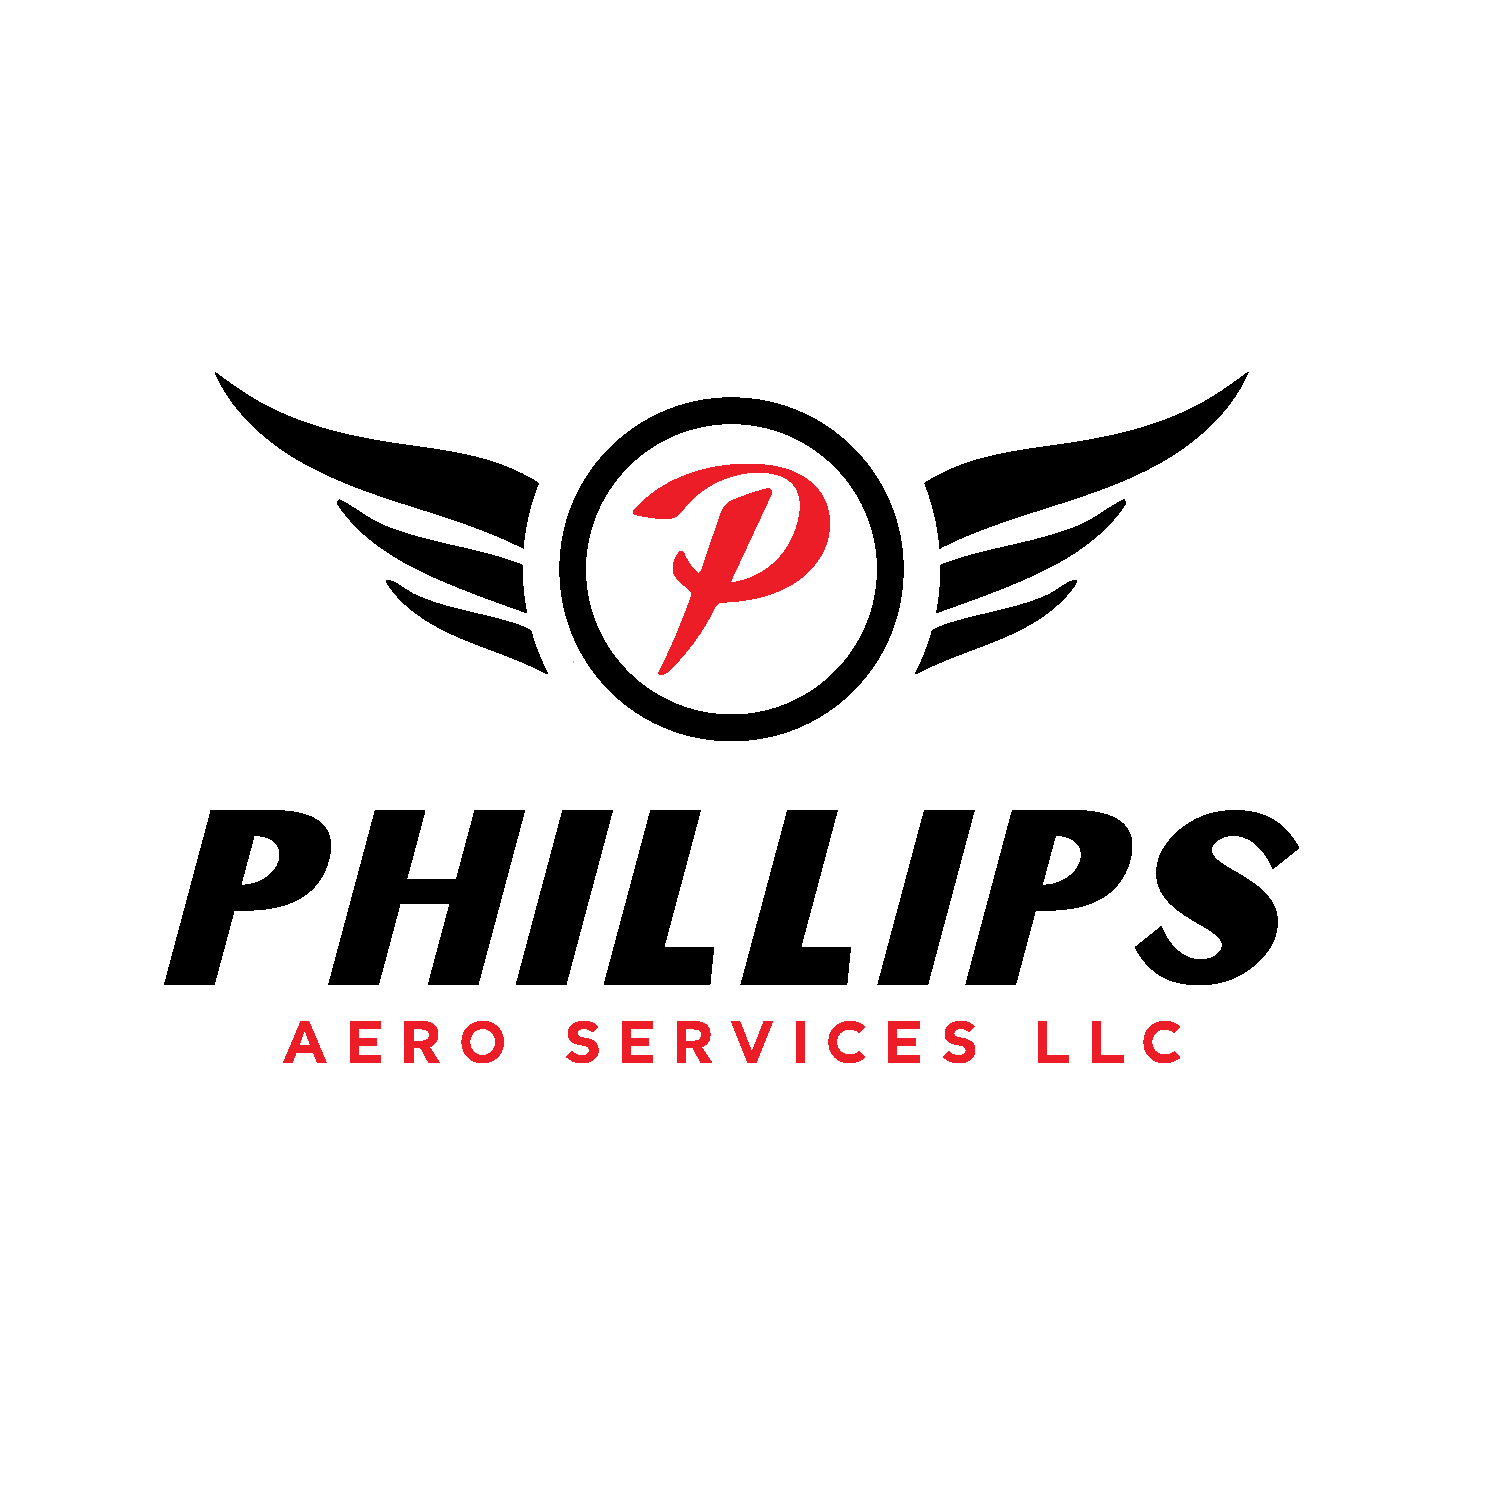 Phillips Aero Services